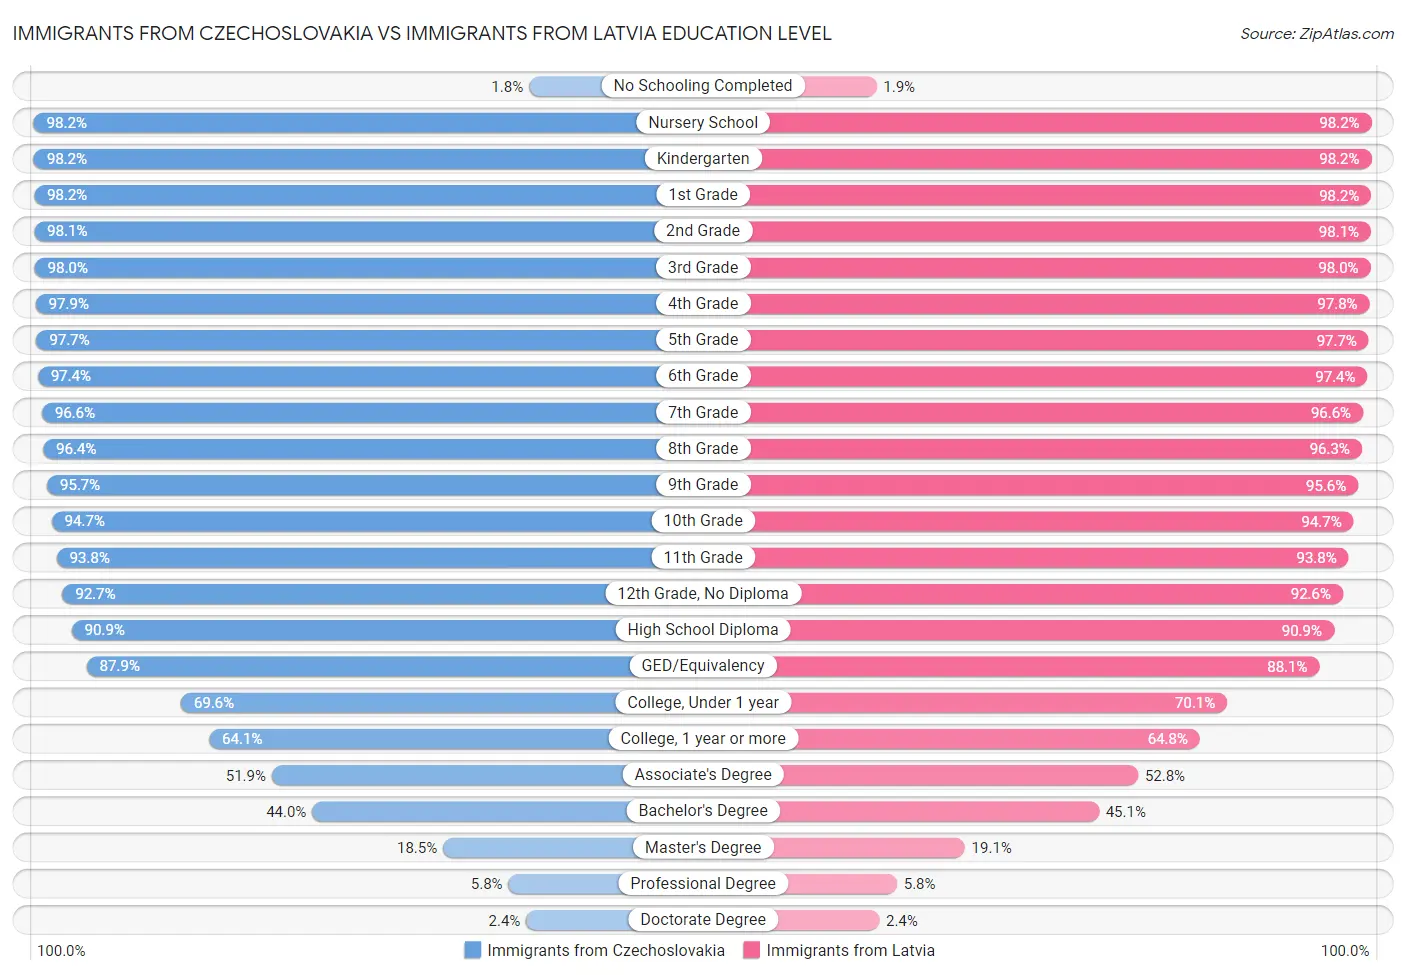 Immigrants from Czechoslovakia vs Immigrants from Latvia Education Level